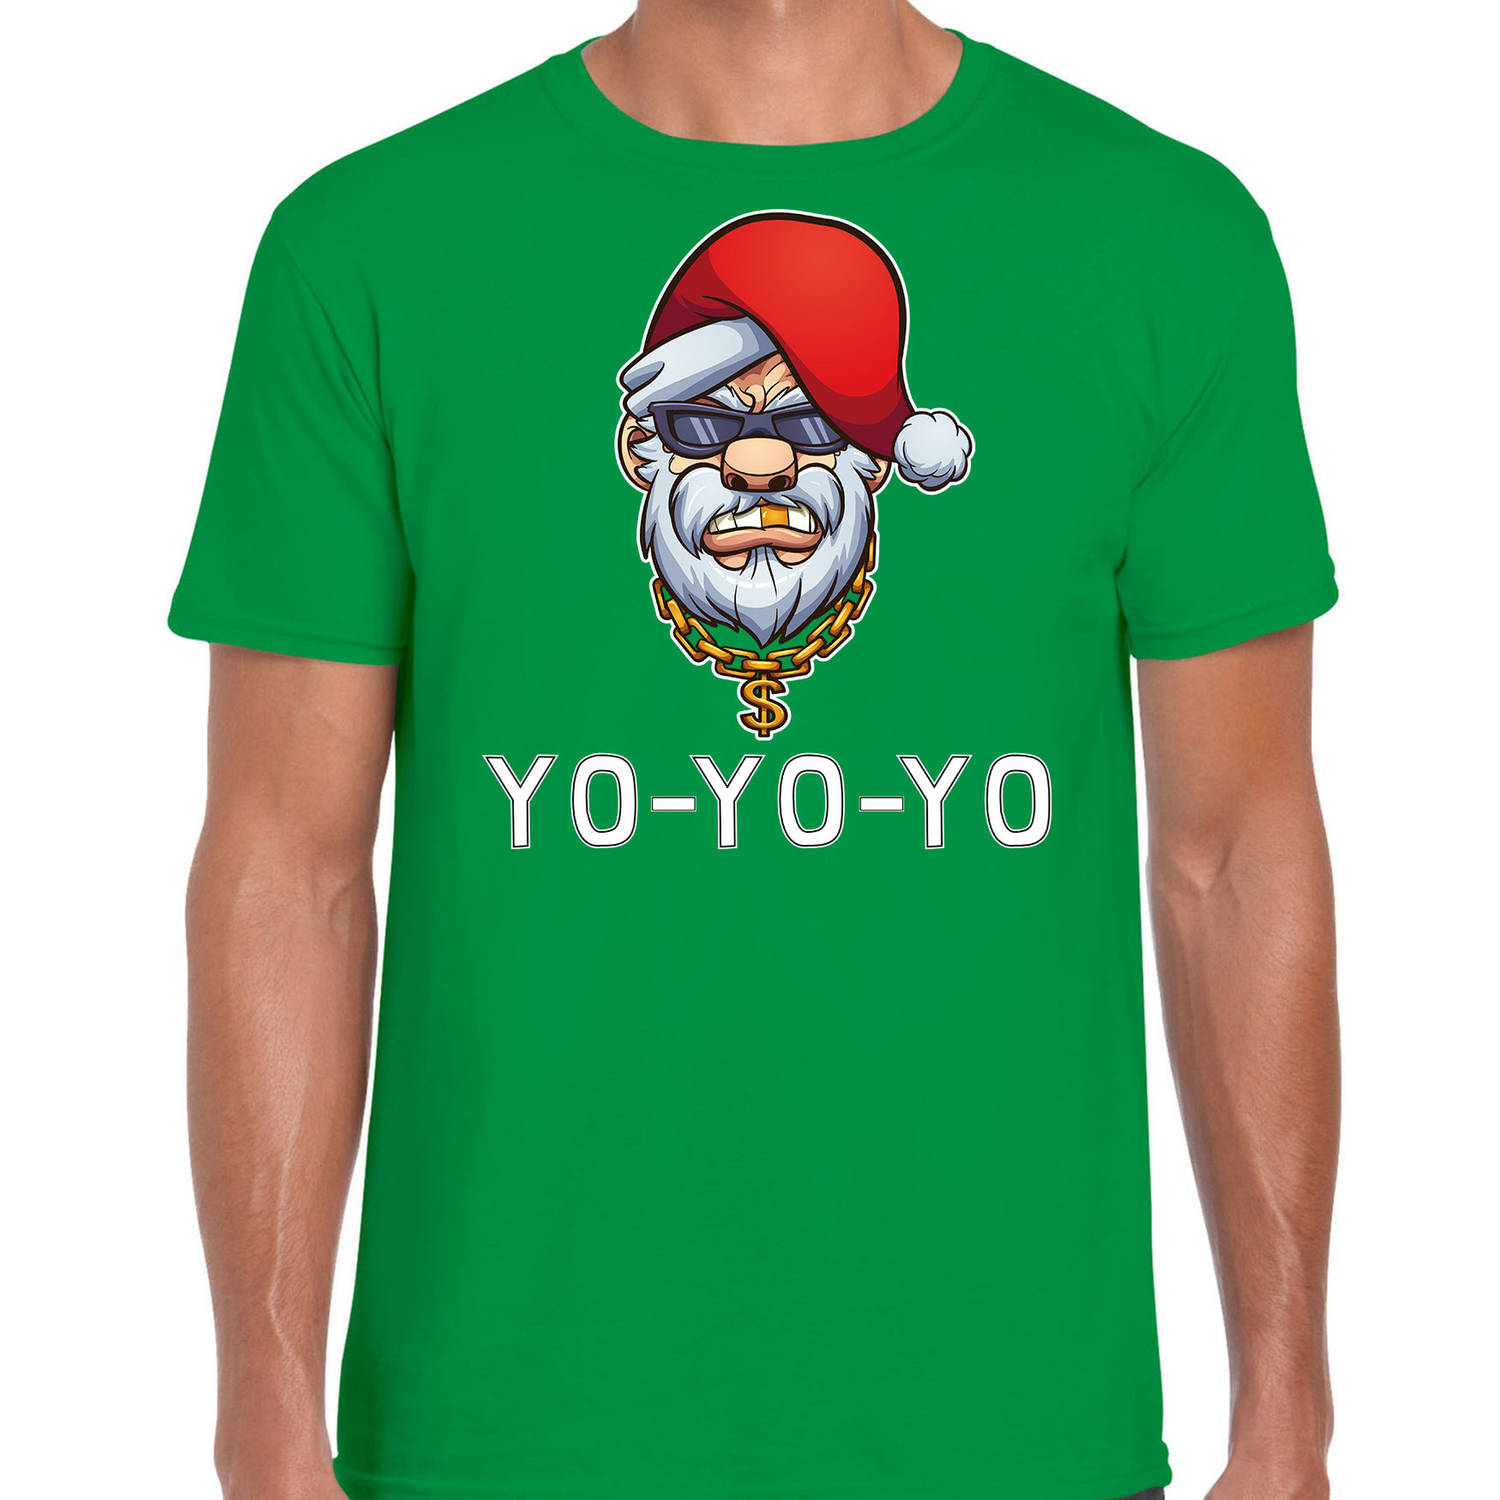 Groen Kerst shirt/ Kerstkleding Gangster / rapper Santa voor heren S - kerst t-shirts